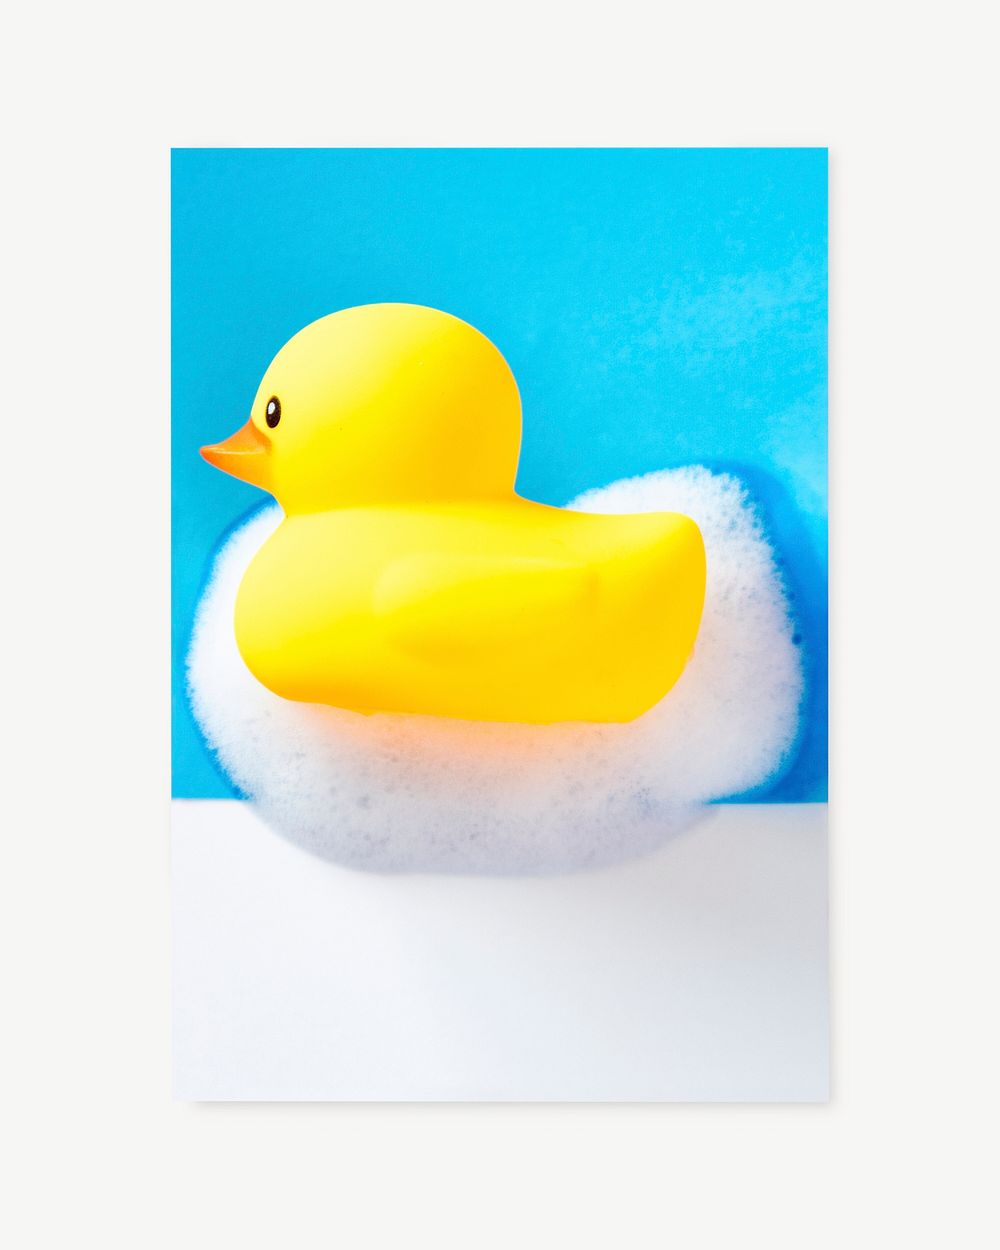 Bath rubber duck toy collage element psd